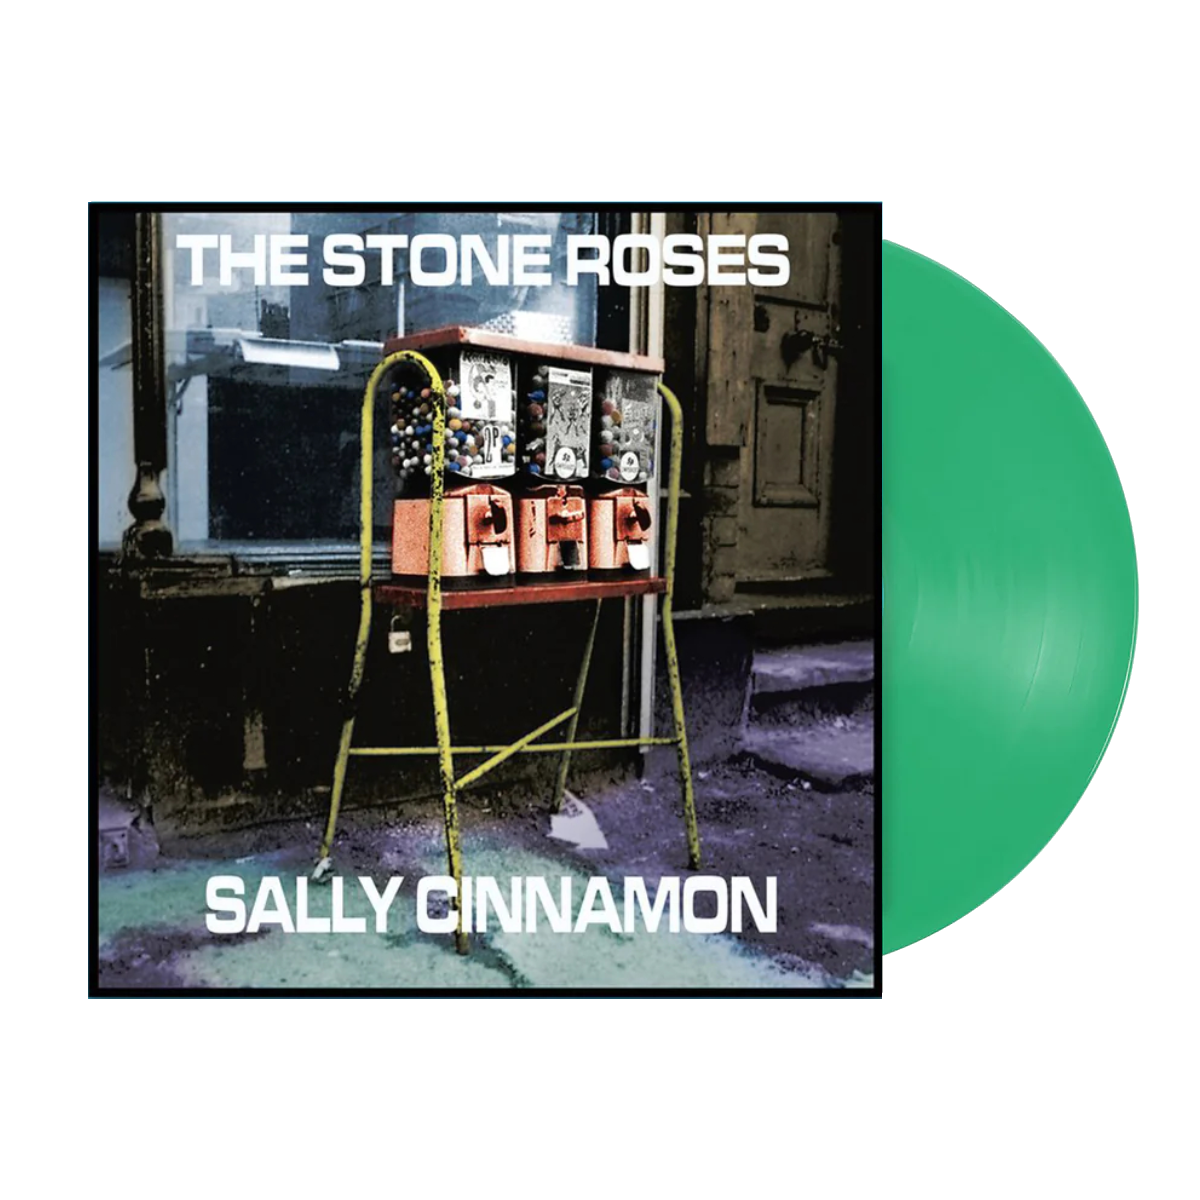 The Stone Roses - Sally Cinnamon: Limited Edition 180g Orange Vinyl